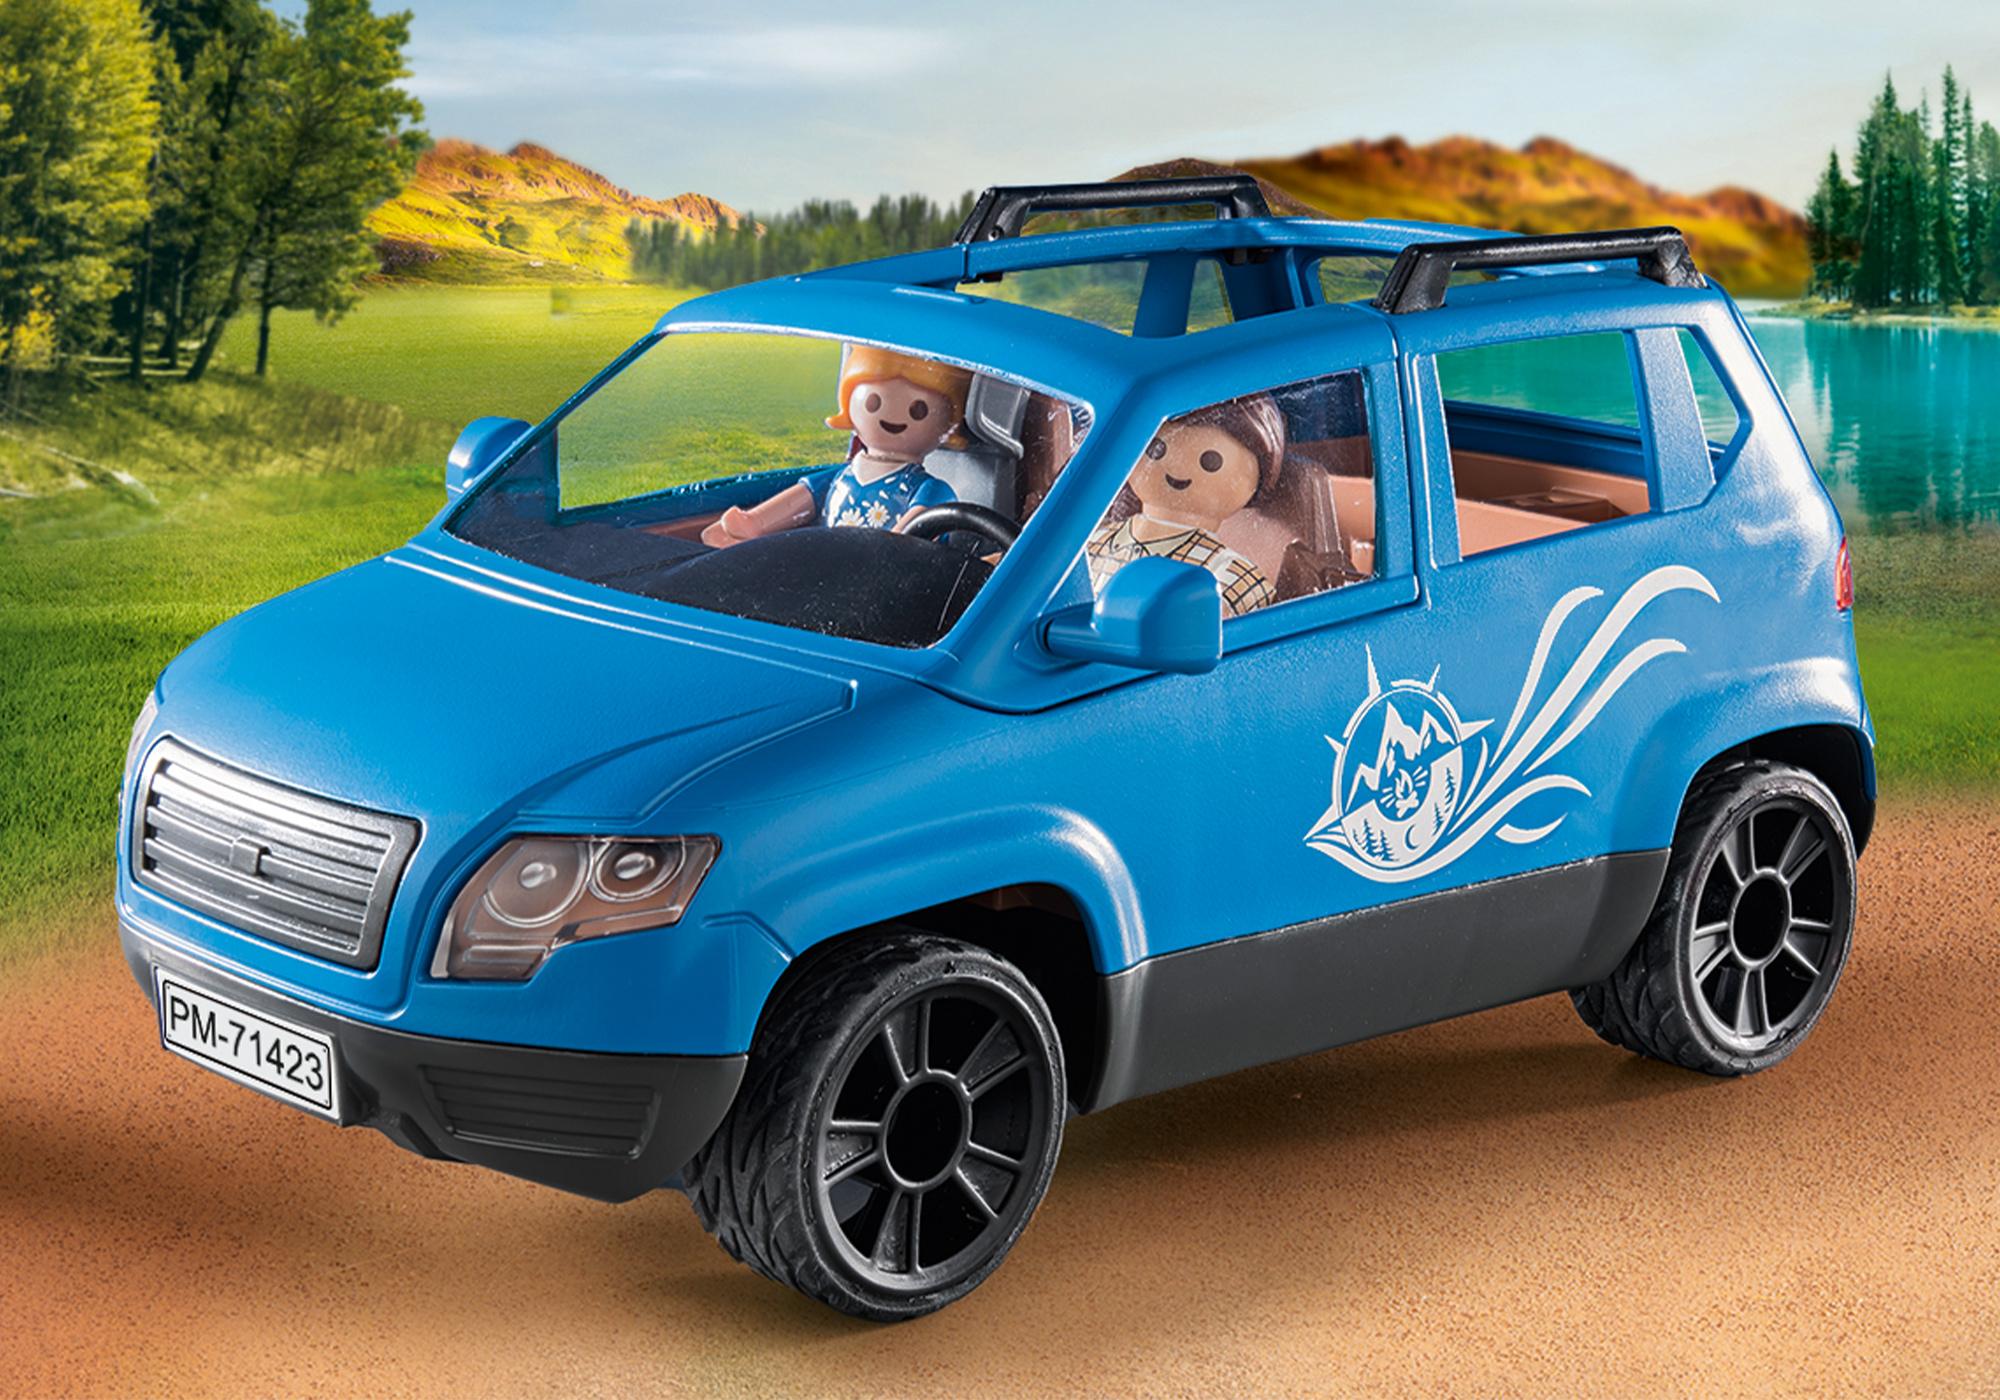 Famille avec voiture et caravane - Playmobil 71423 Family Fun Camping